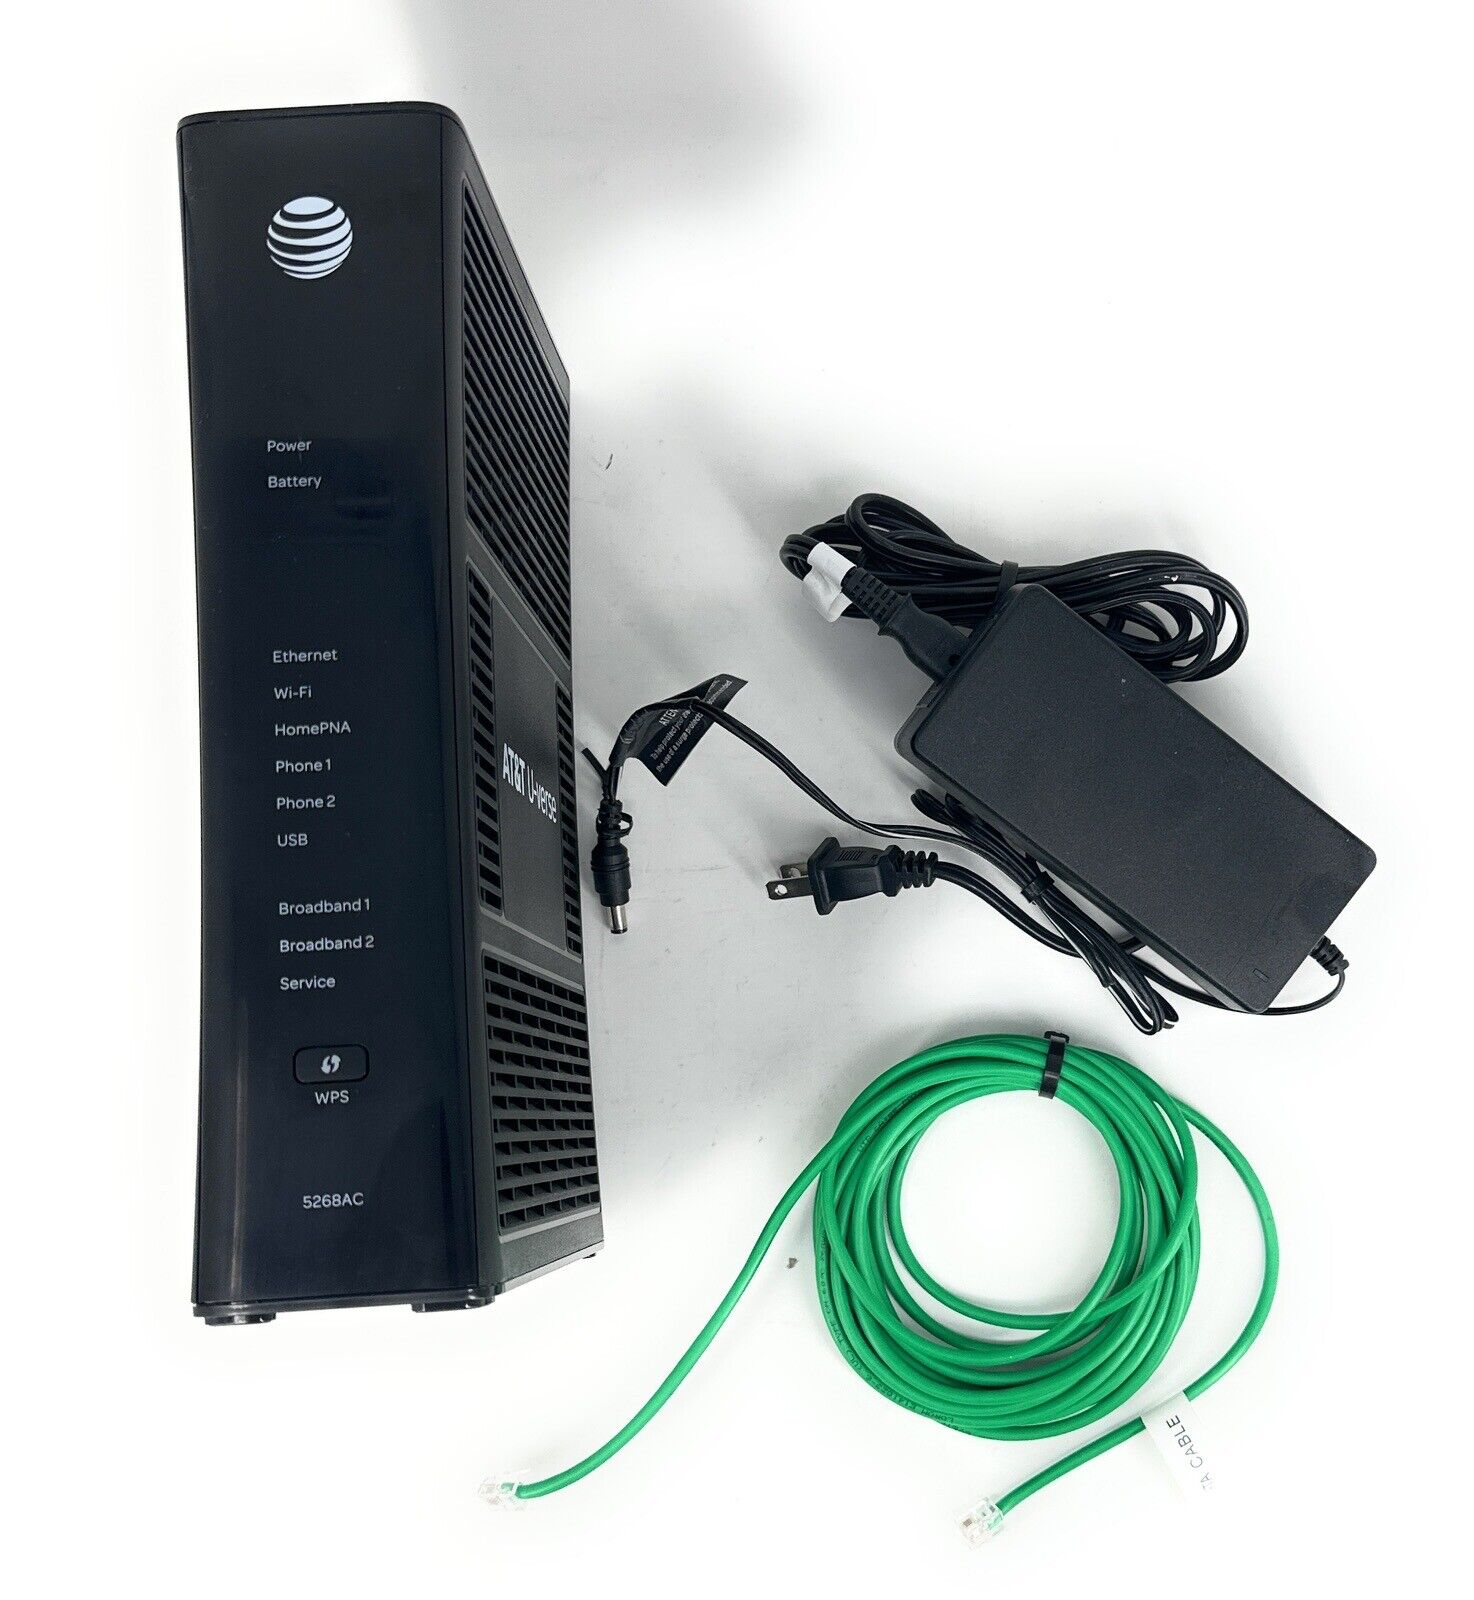 AT&T U-Verse Model 5268AC WI-FI Internet PACE Modem Router w/ Adapter